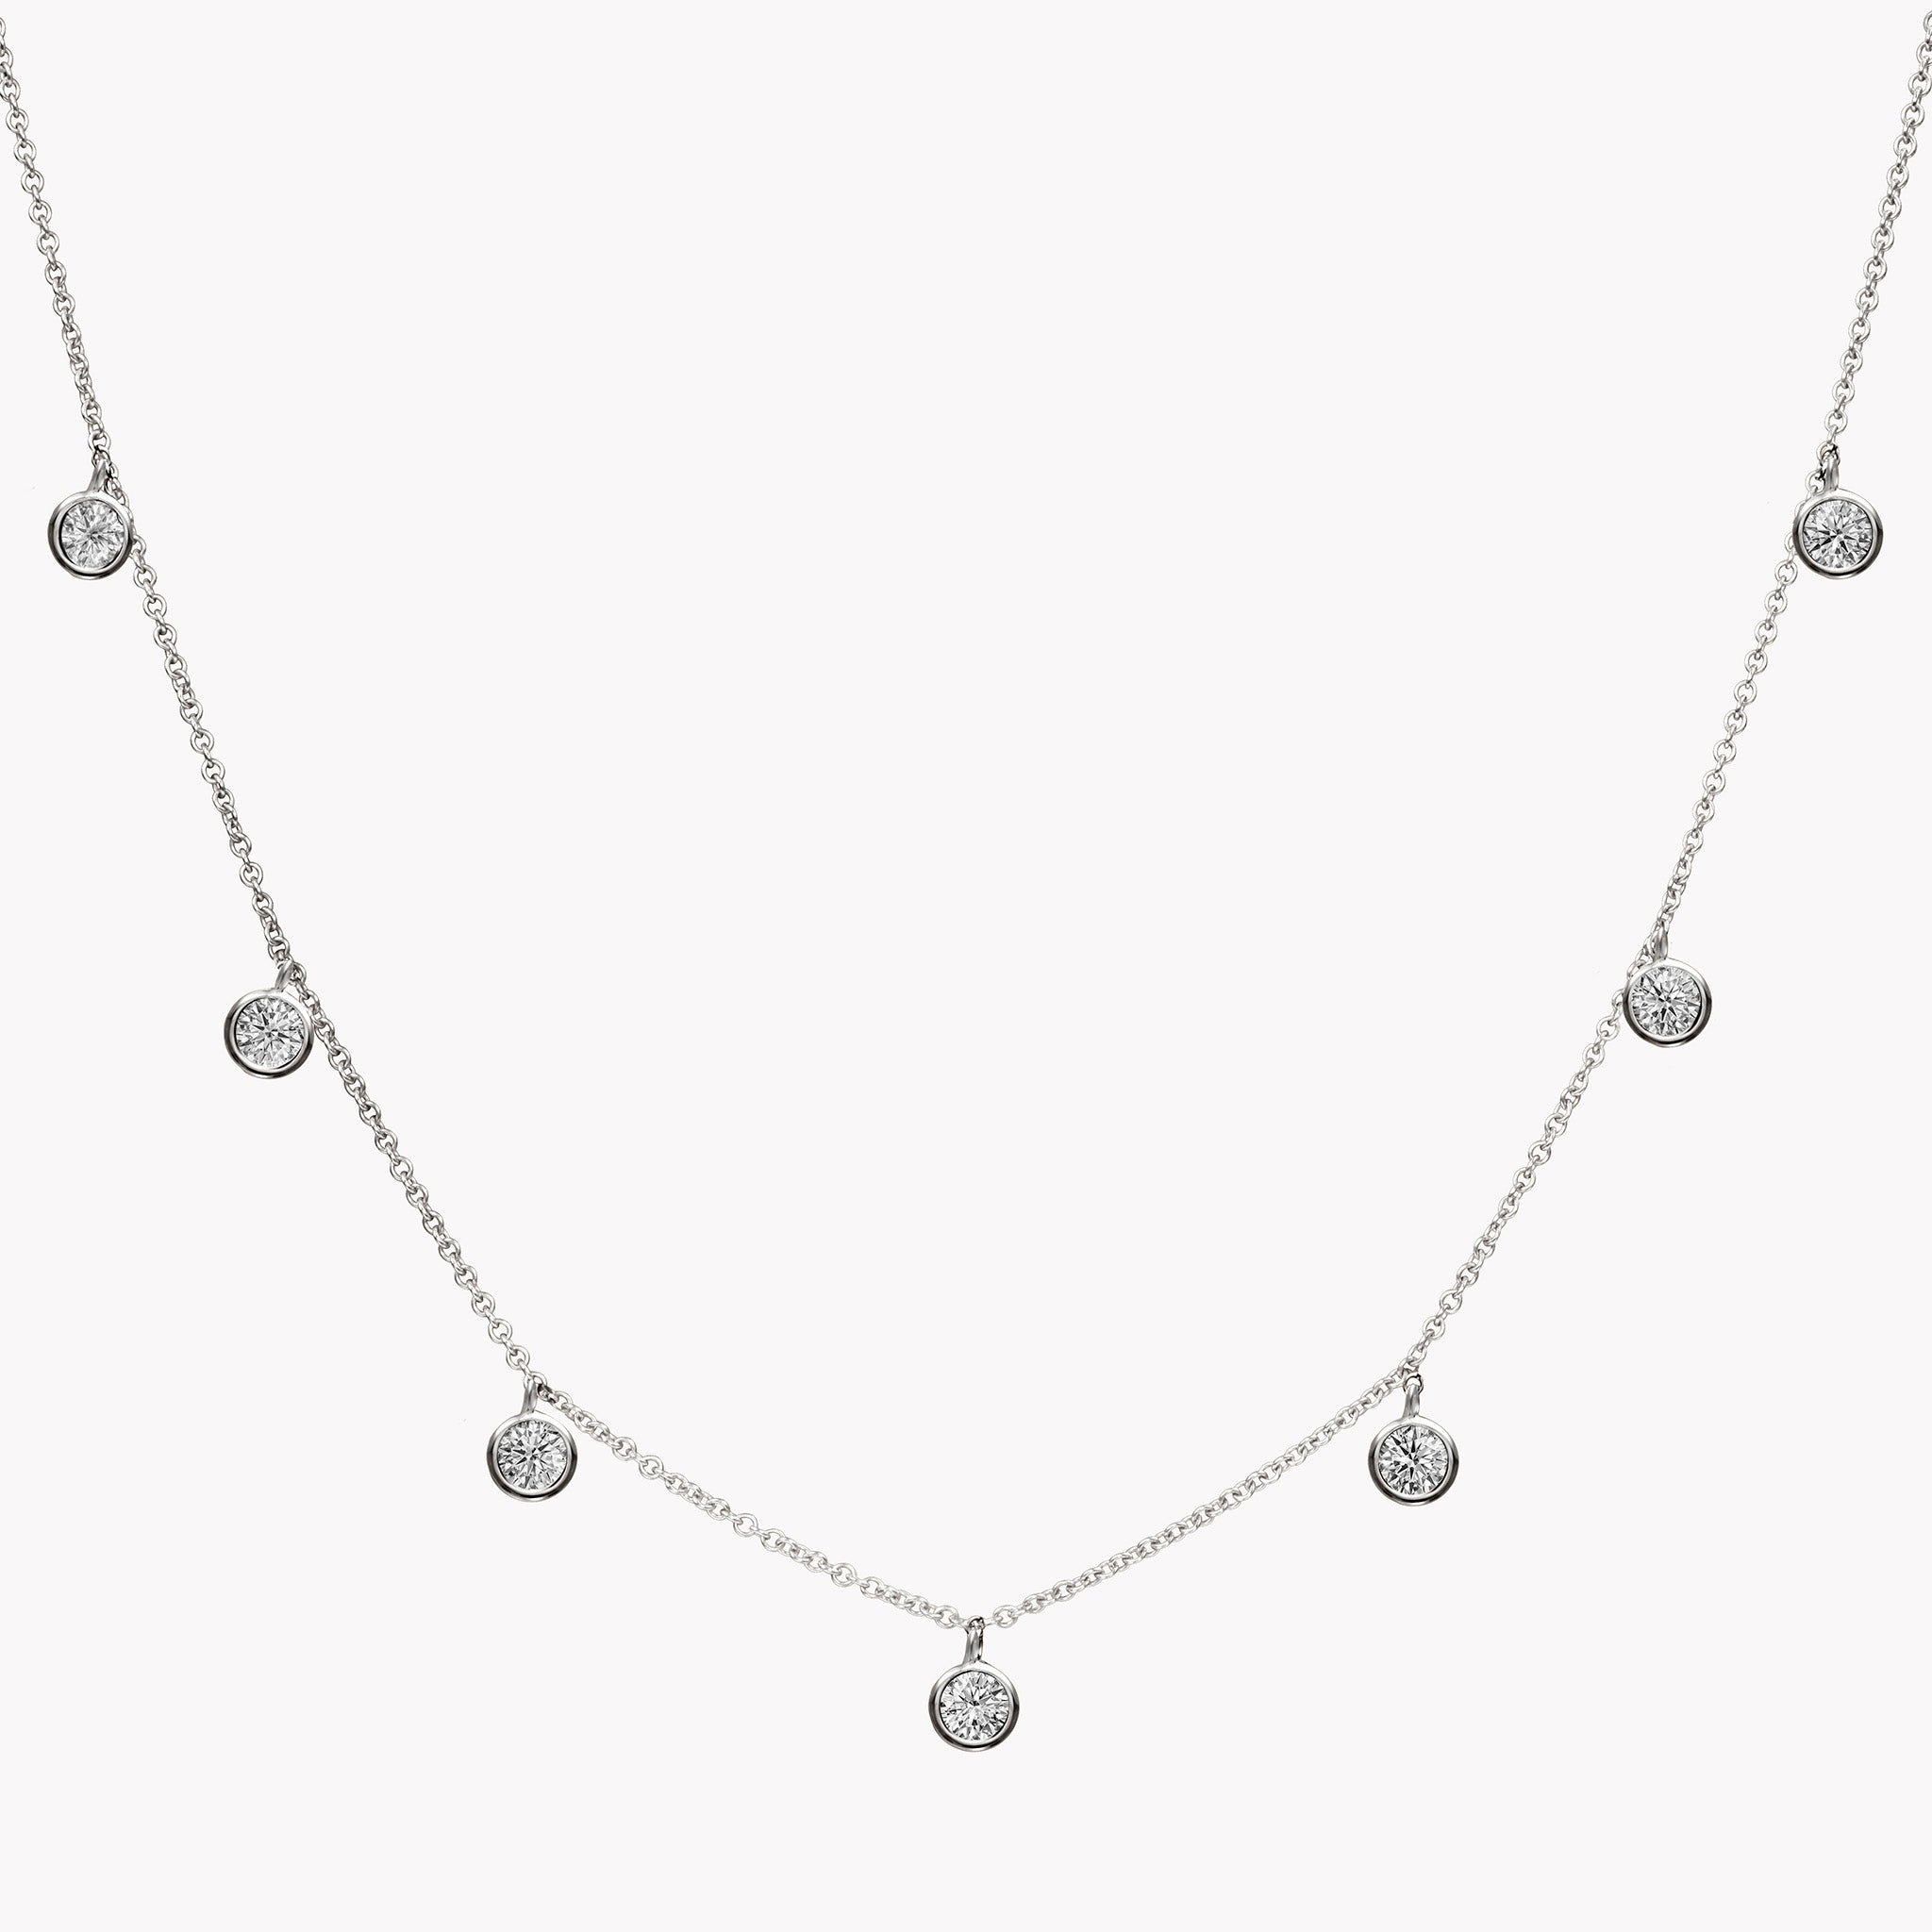 The Mia Diamond Necklace